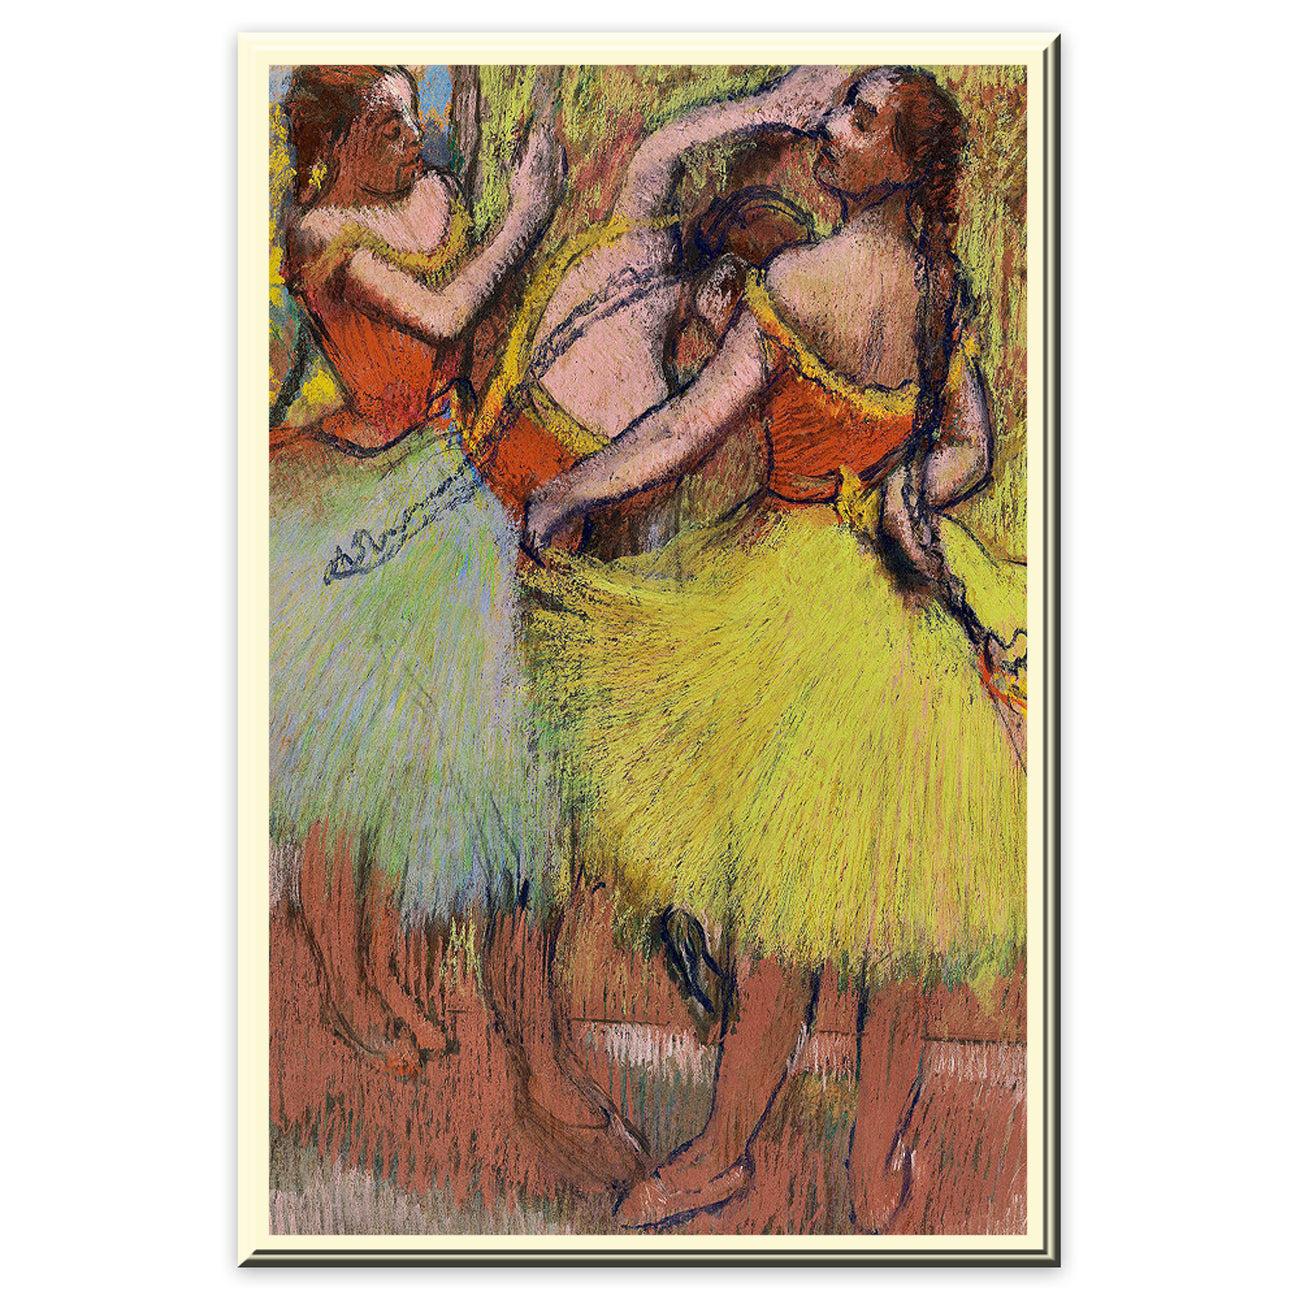 Three Dancers with Braids by Edgar Degas